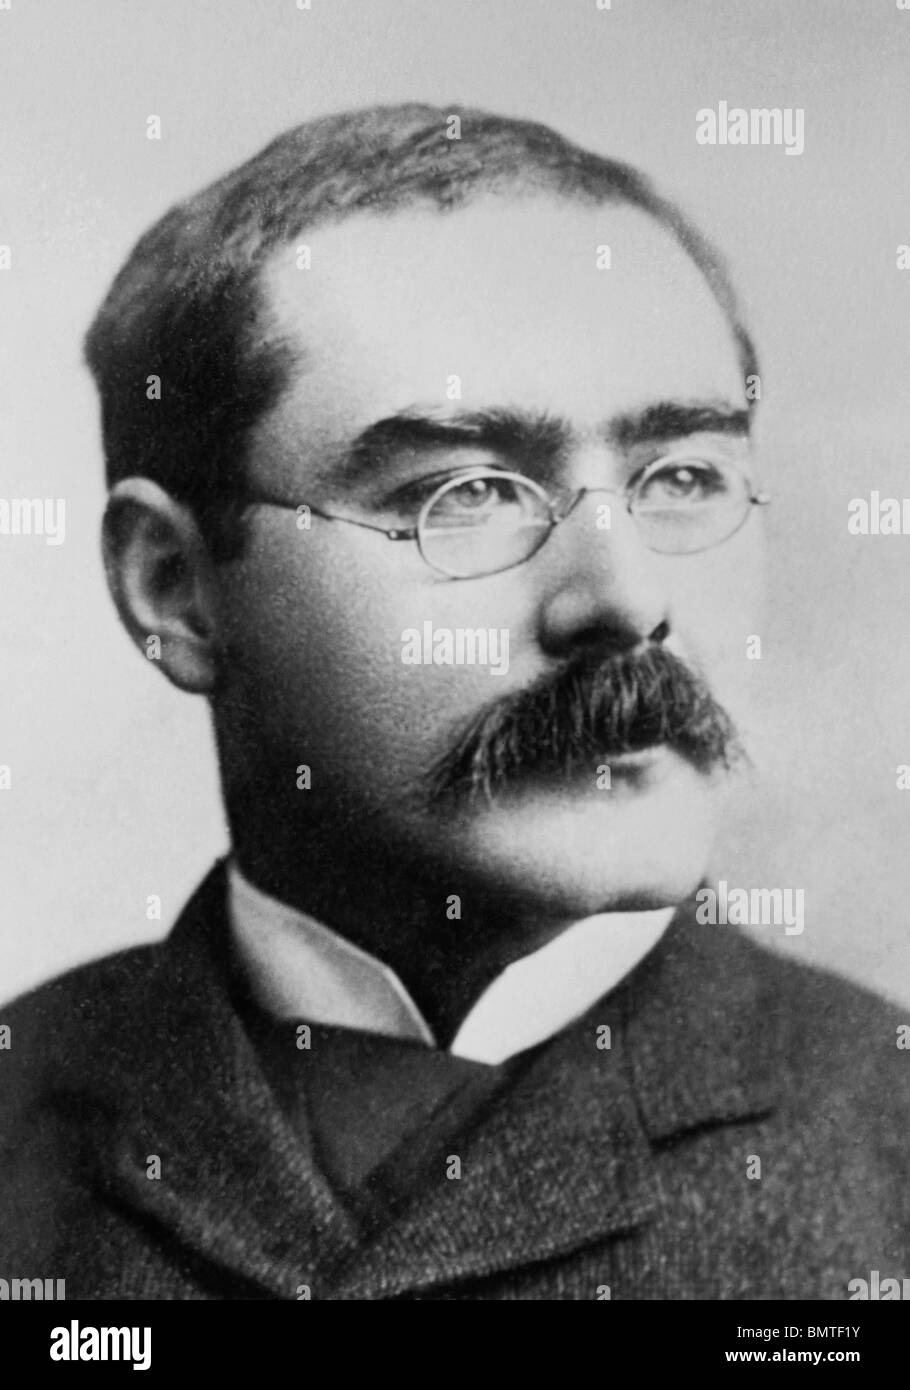 Undated portrait photo of British author + poet Rudyard Kipling (1865 - 1936) - winner of the Nobel Prize in Literature in 1907. Stock Photo